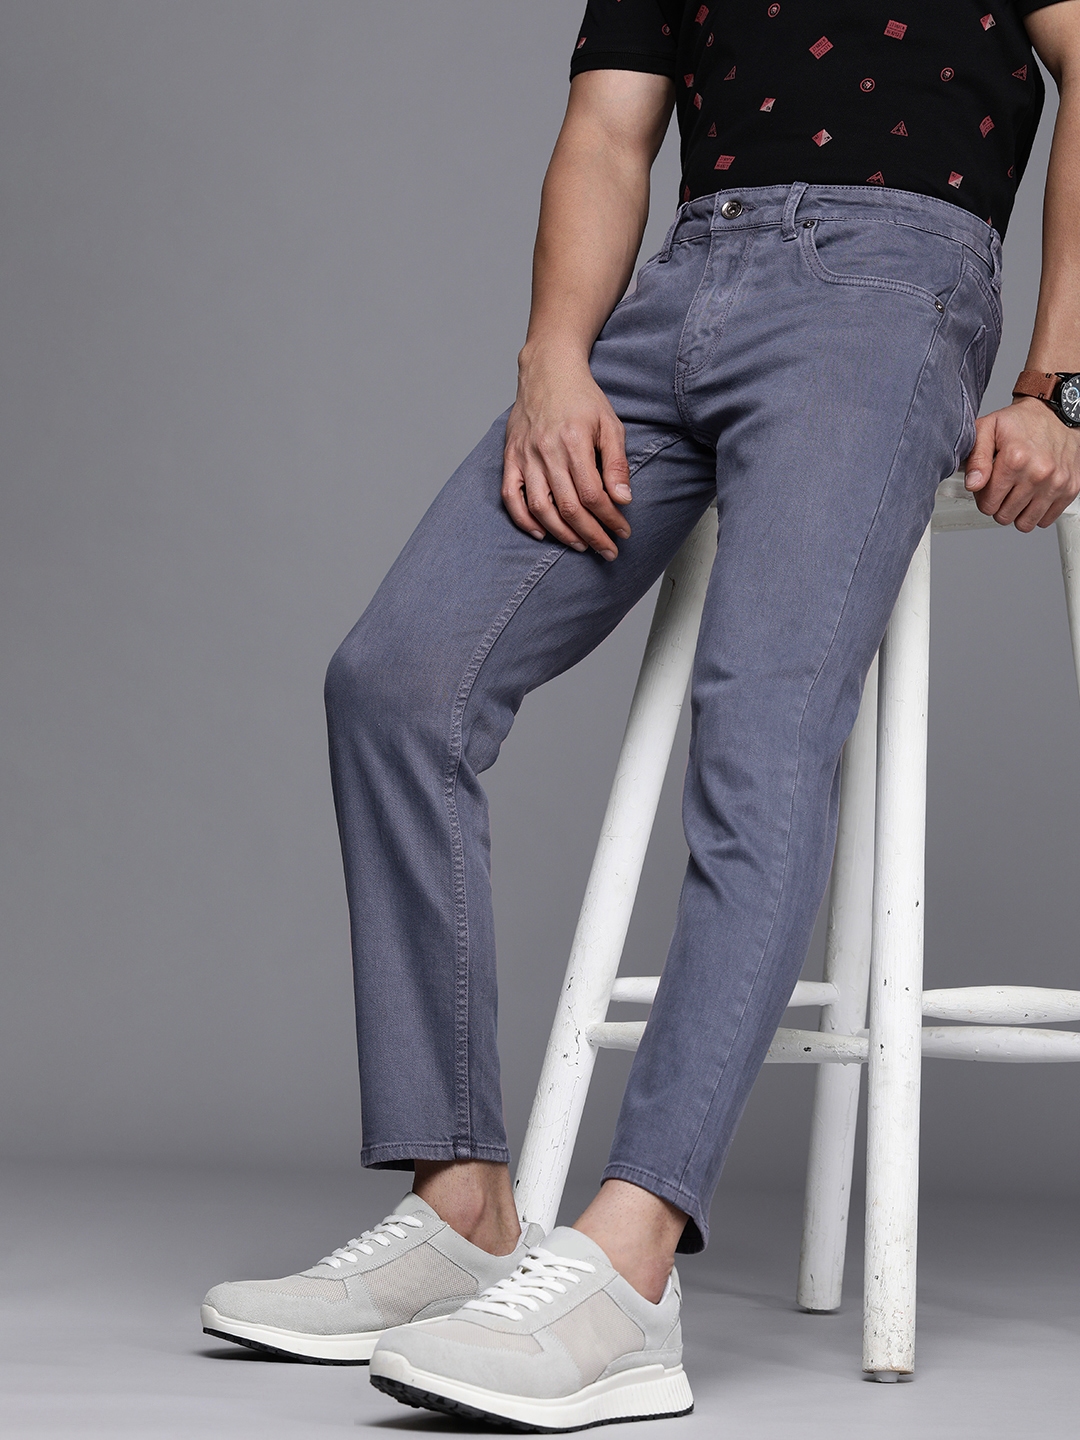 Louis Philippe Jeans Mens Jeans - Buy Louis Philippe Jeans Mens